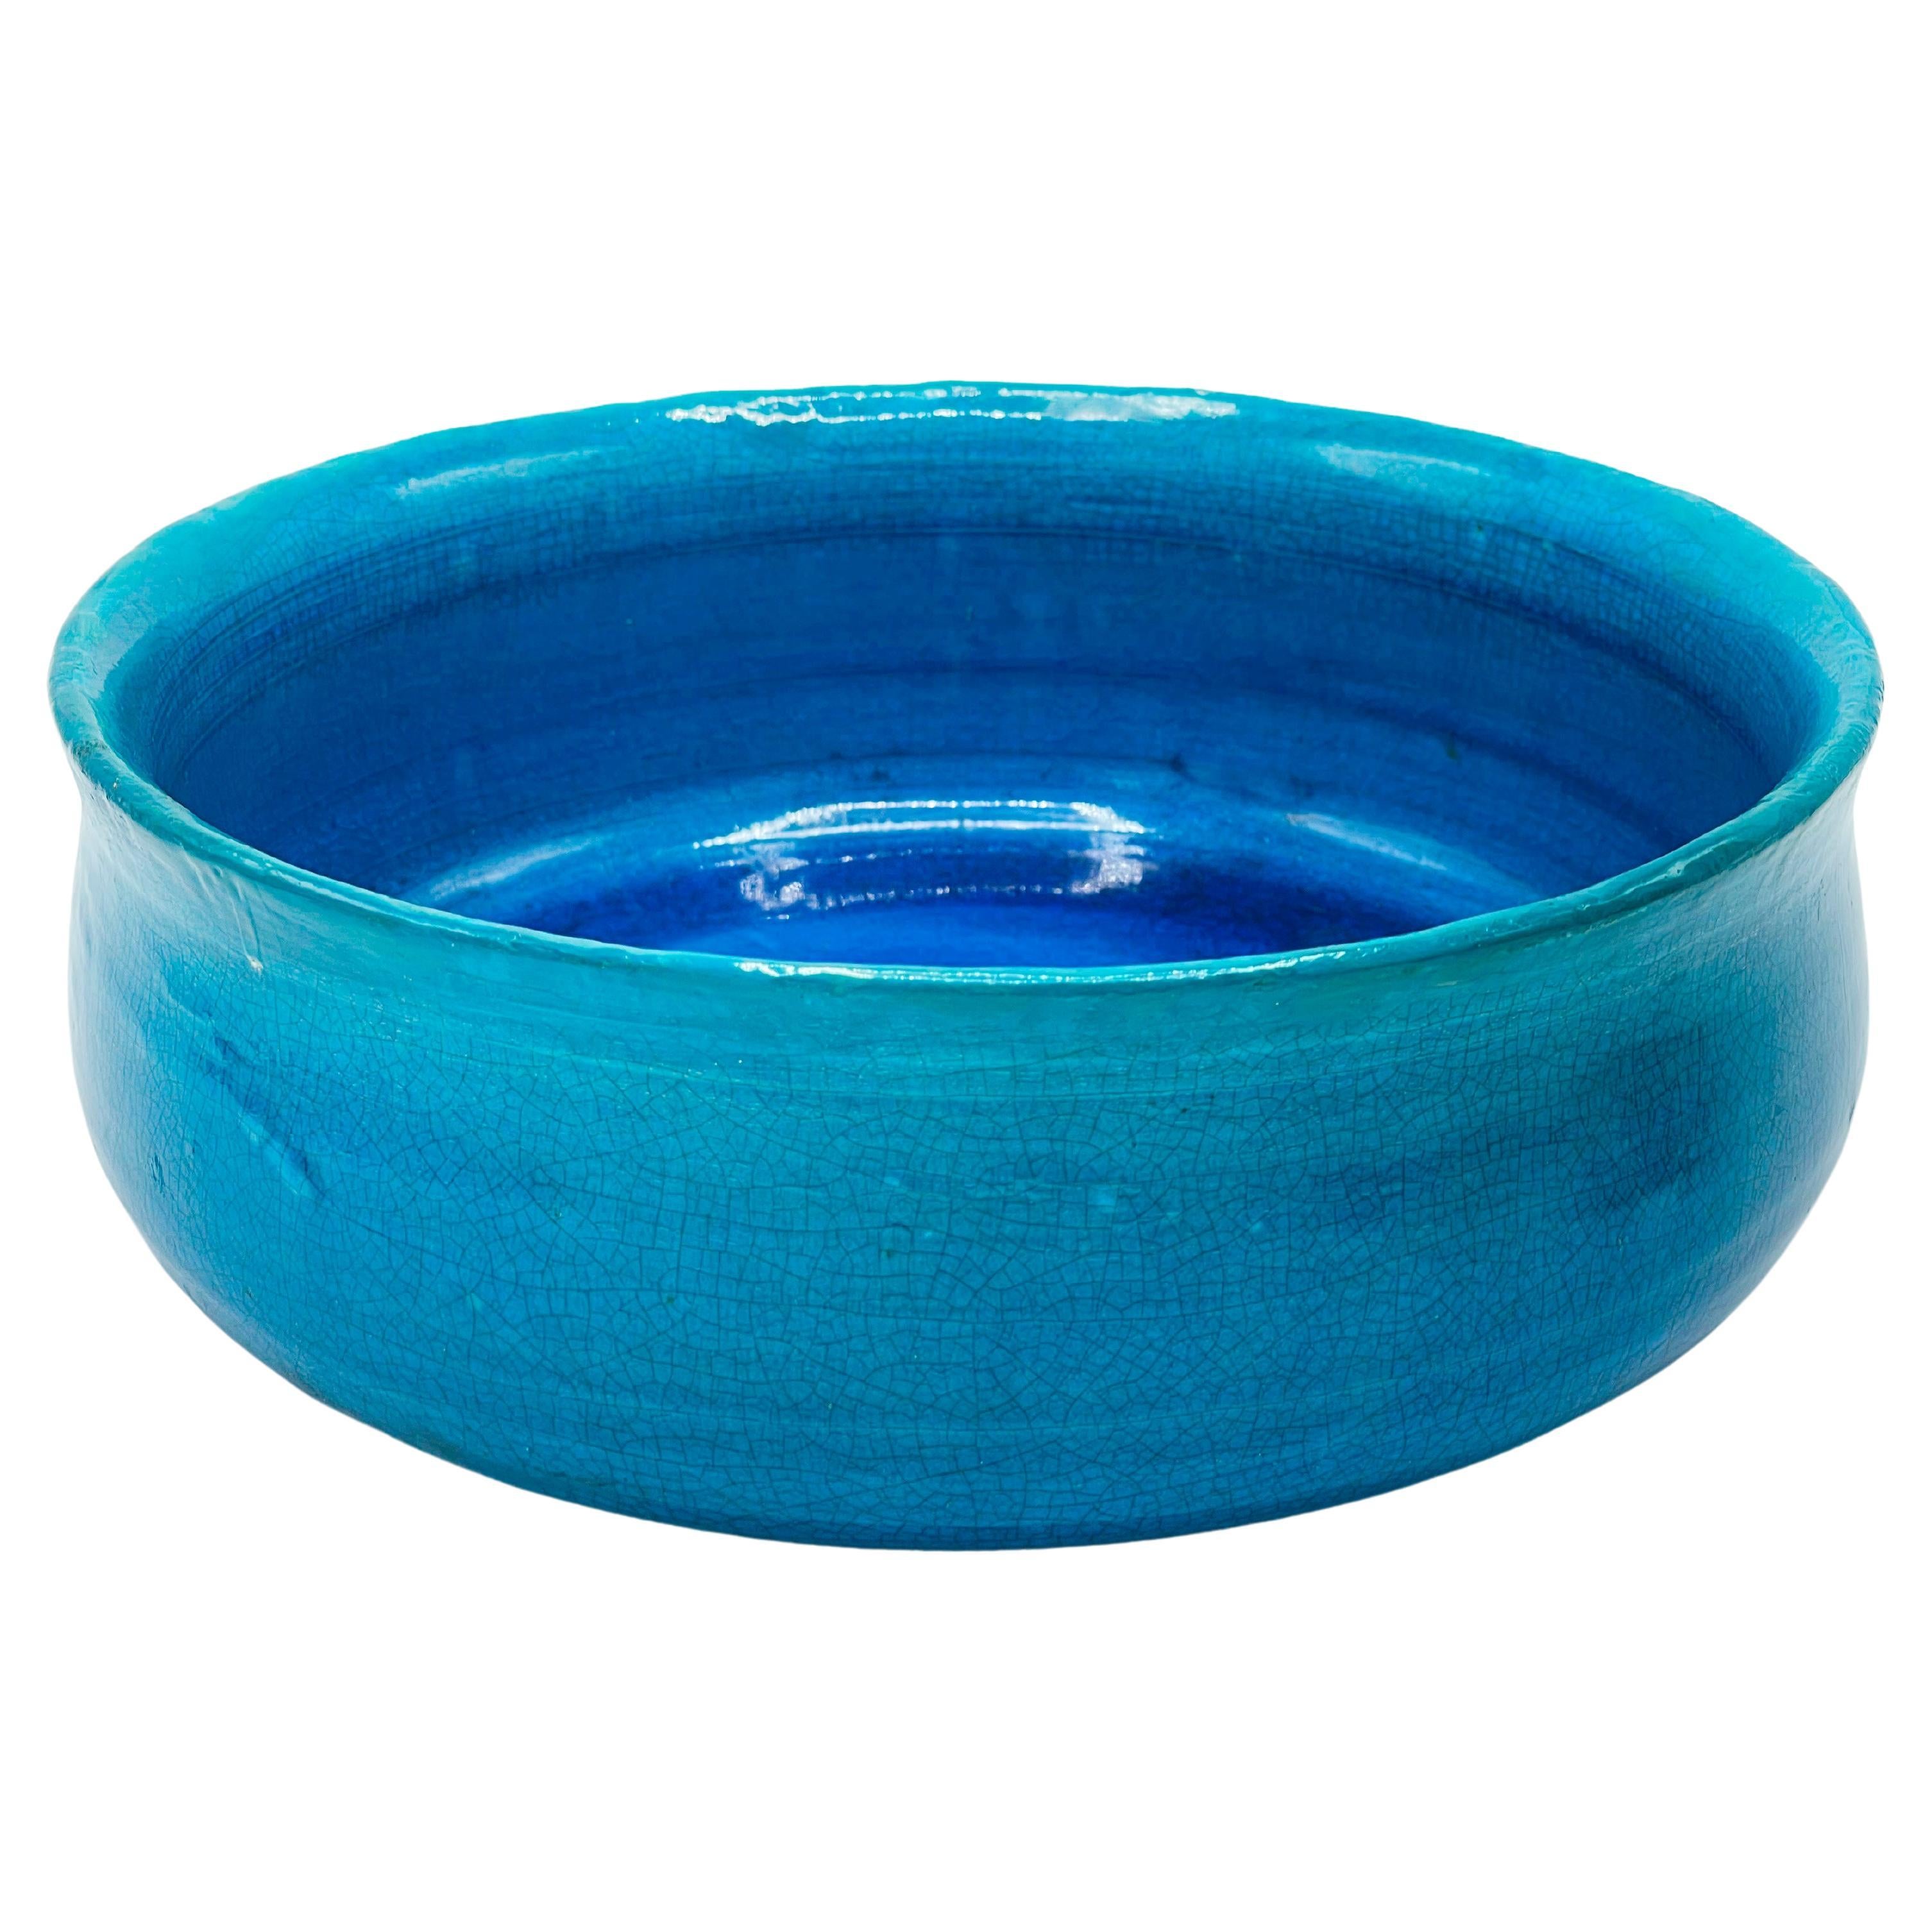 Jean Besnard Crackled Turquoise Glazed Pottery bowl For Sale